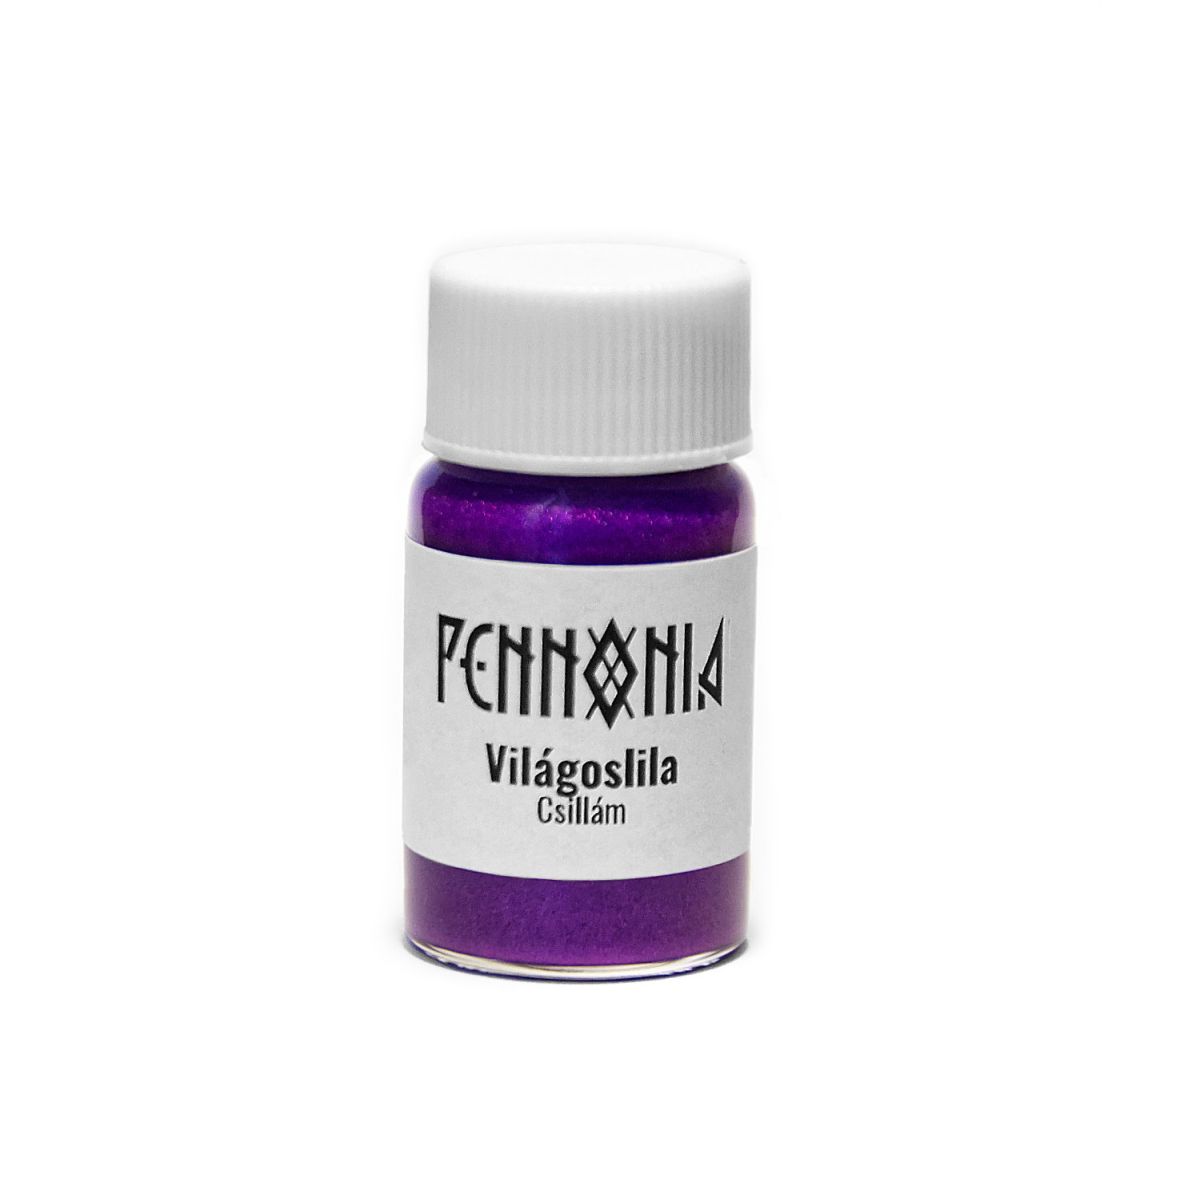 Pennonia shimmer additive - Vilagoslila